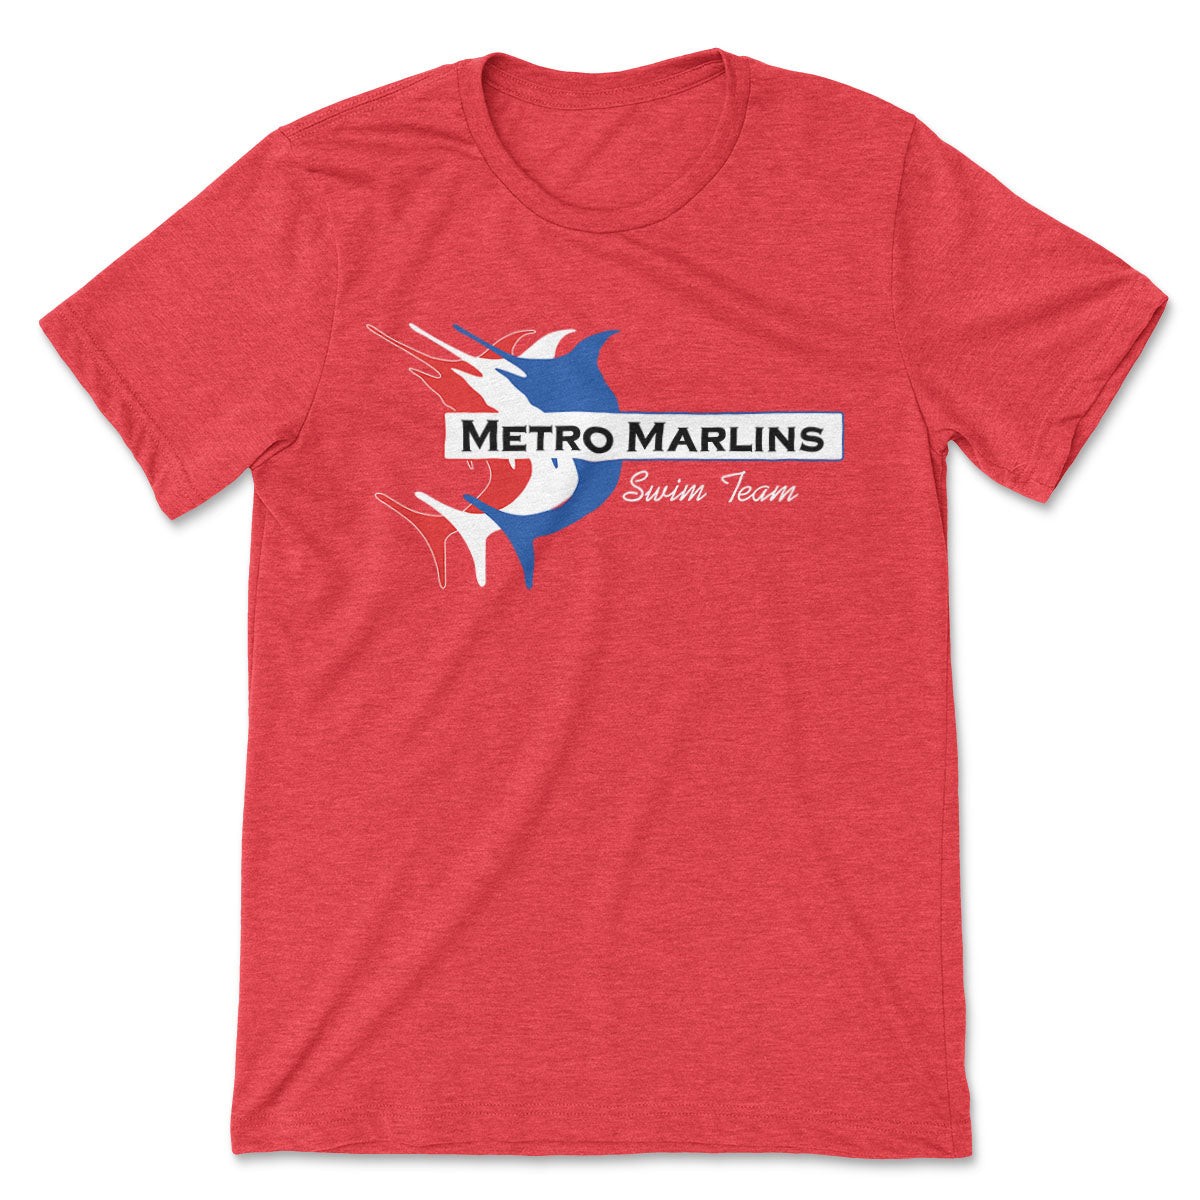 Metro Marlins // Youth Tee